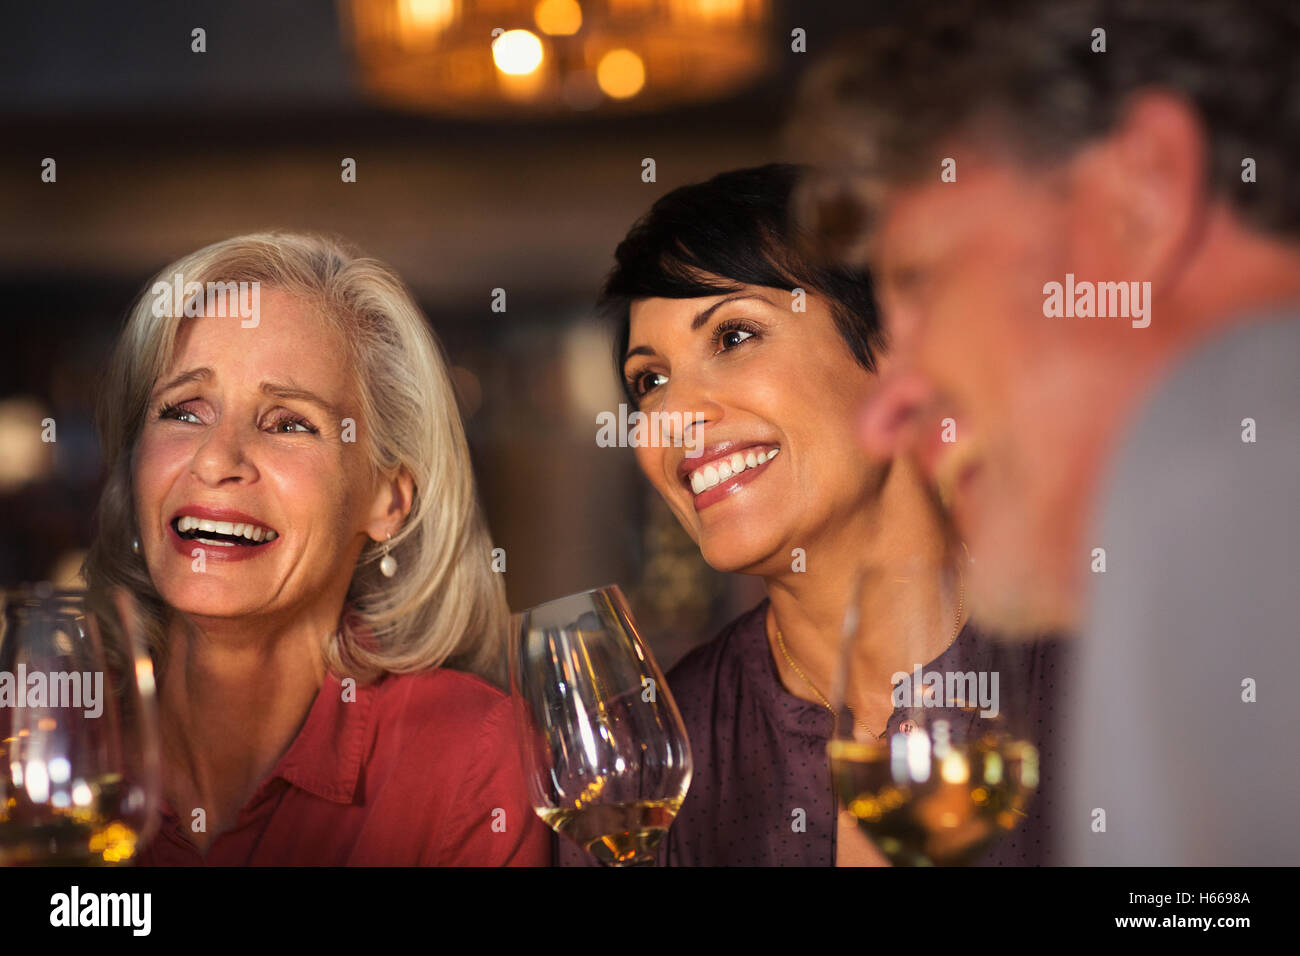 Smiling women drinking white wine at bar Stock Photo